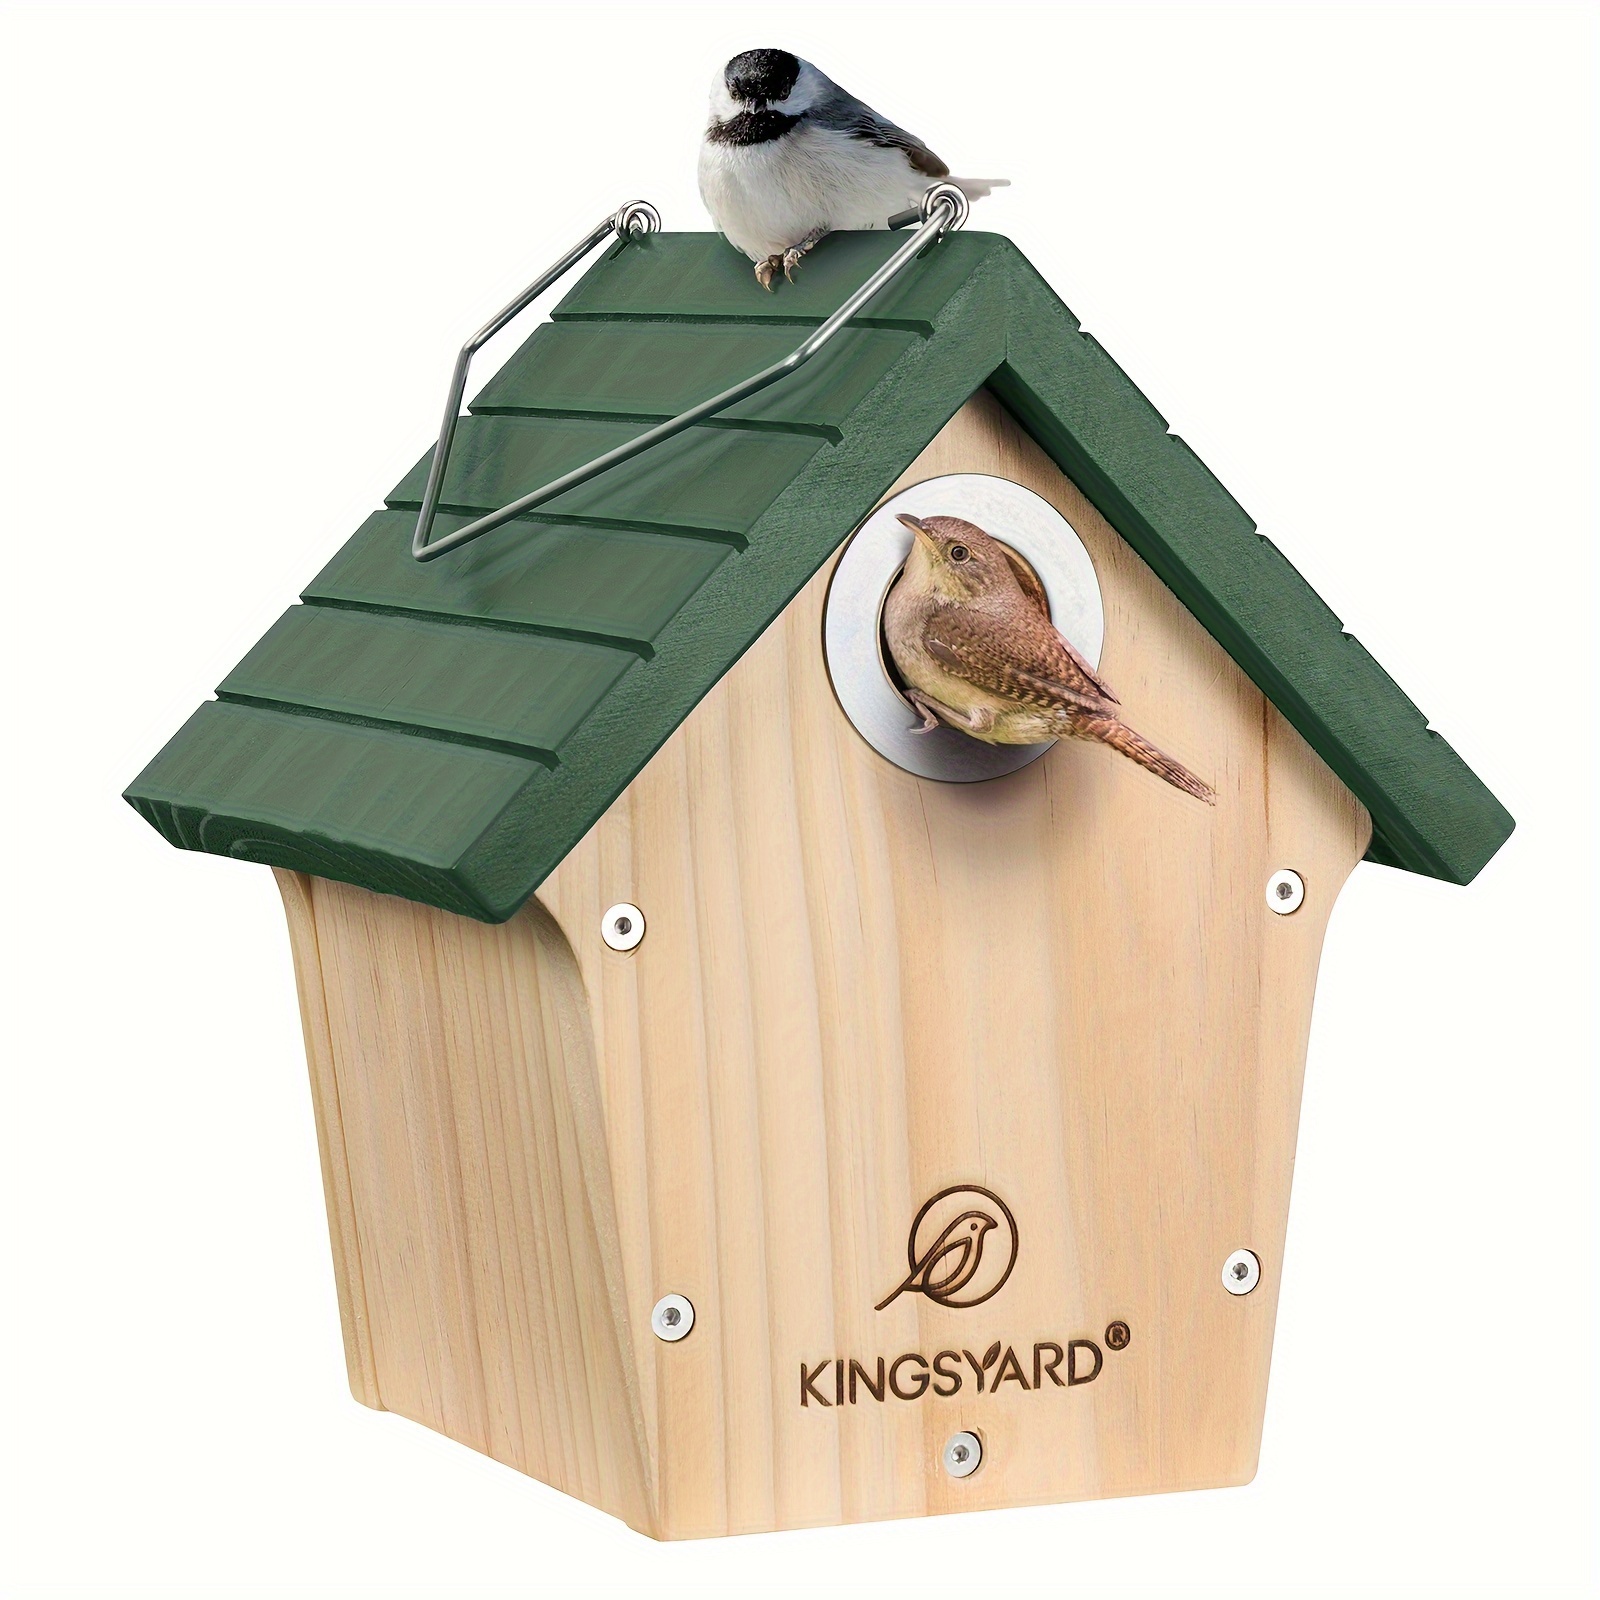 

Kingsyard Wooden Wren House With Prdator Guard, Bird Nesting For Outdoor, Garden Patio Nest Box Birdhouse For Wild Bird Watching